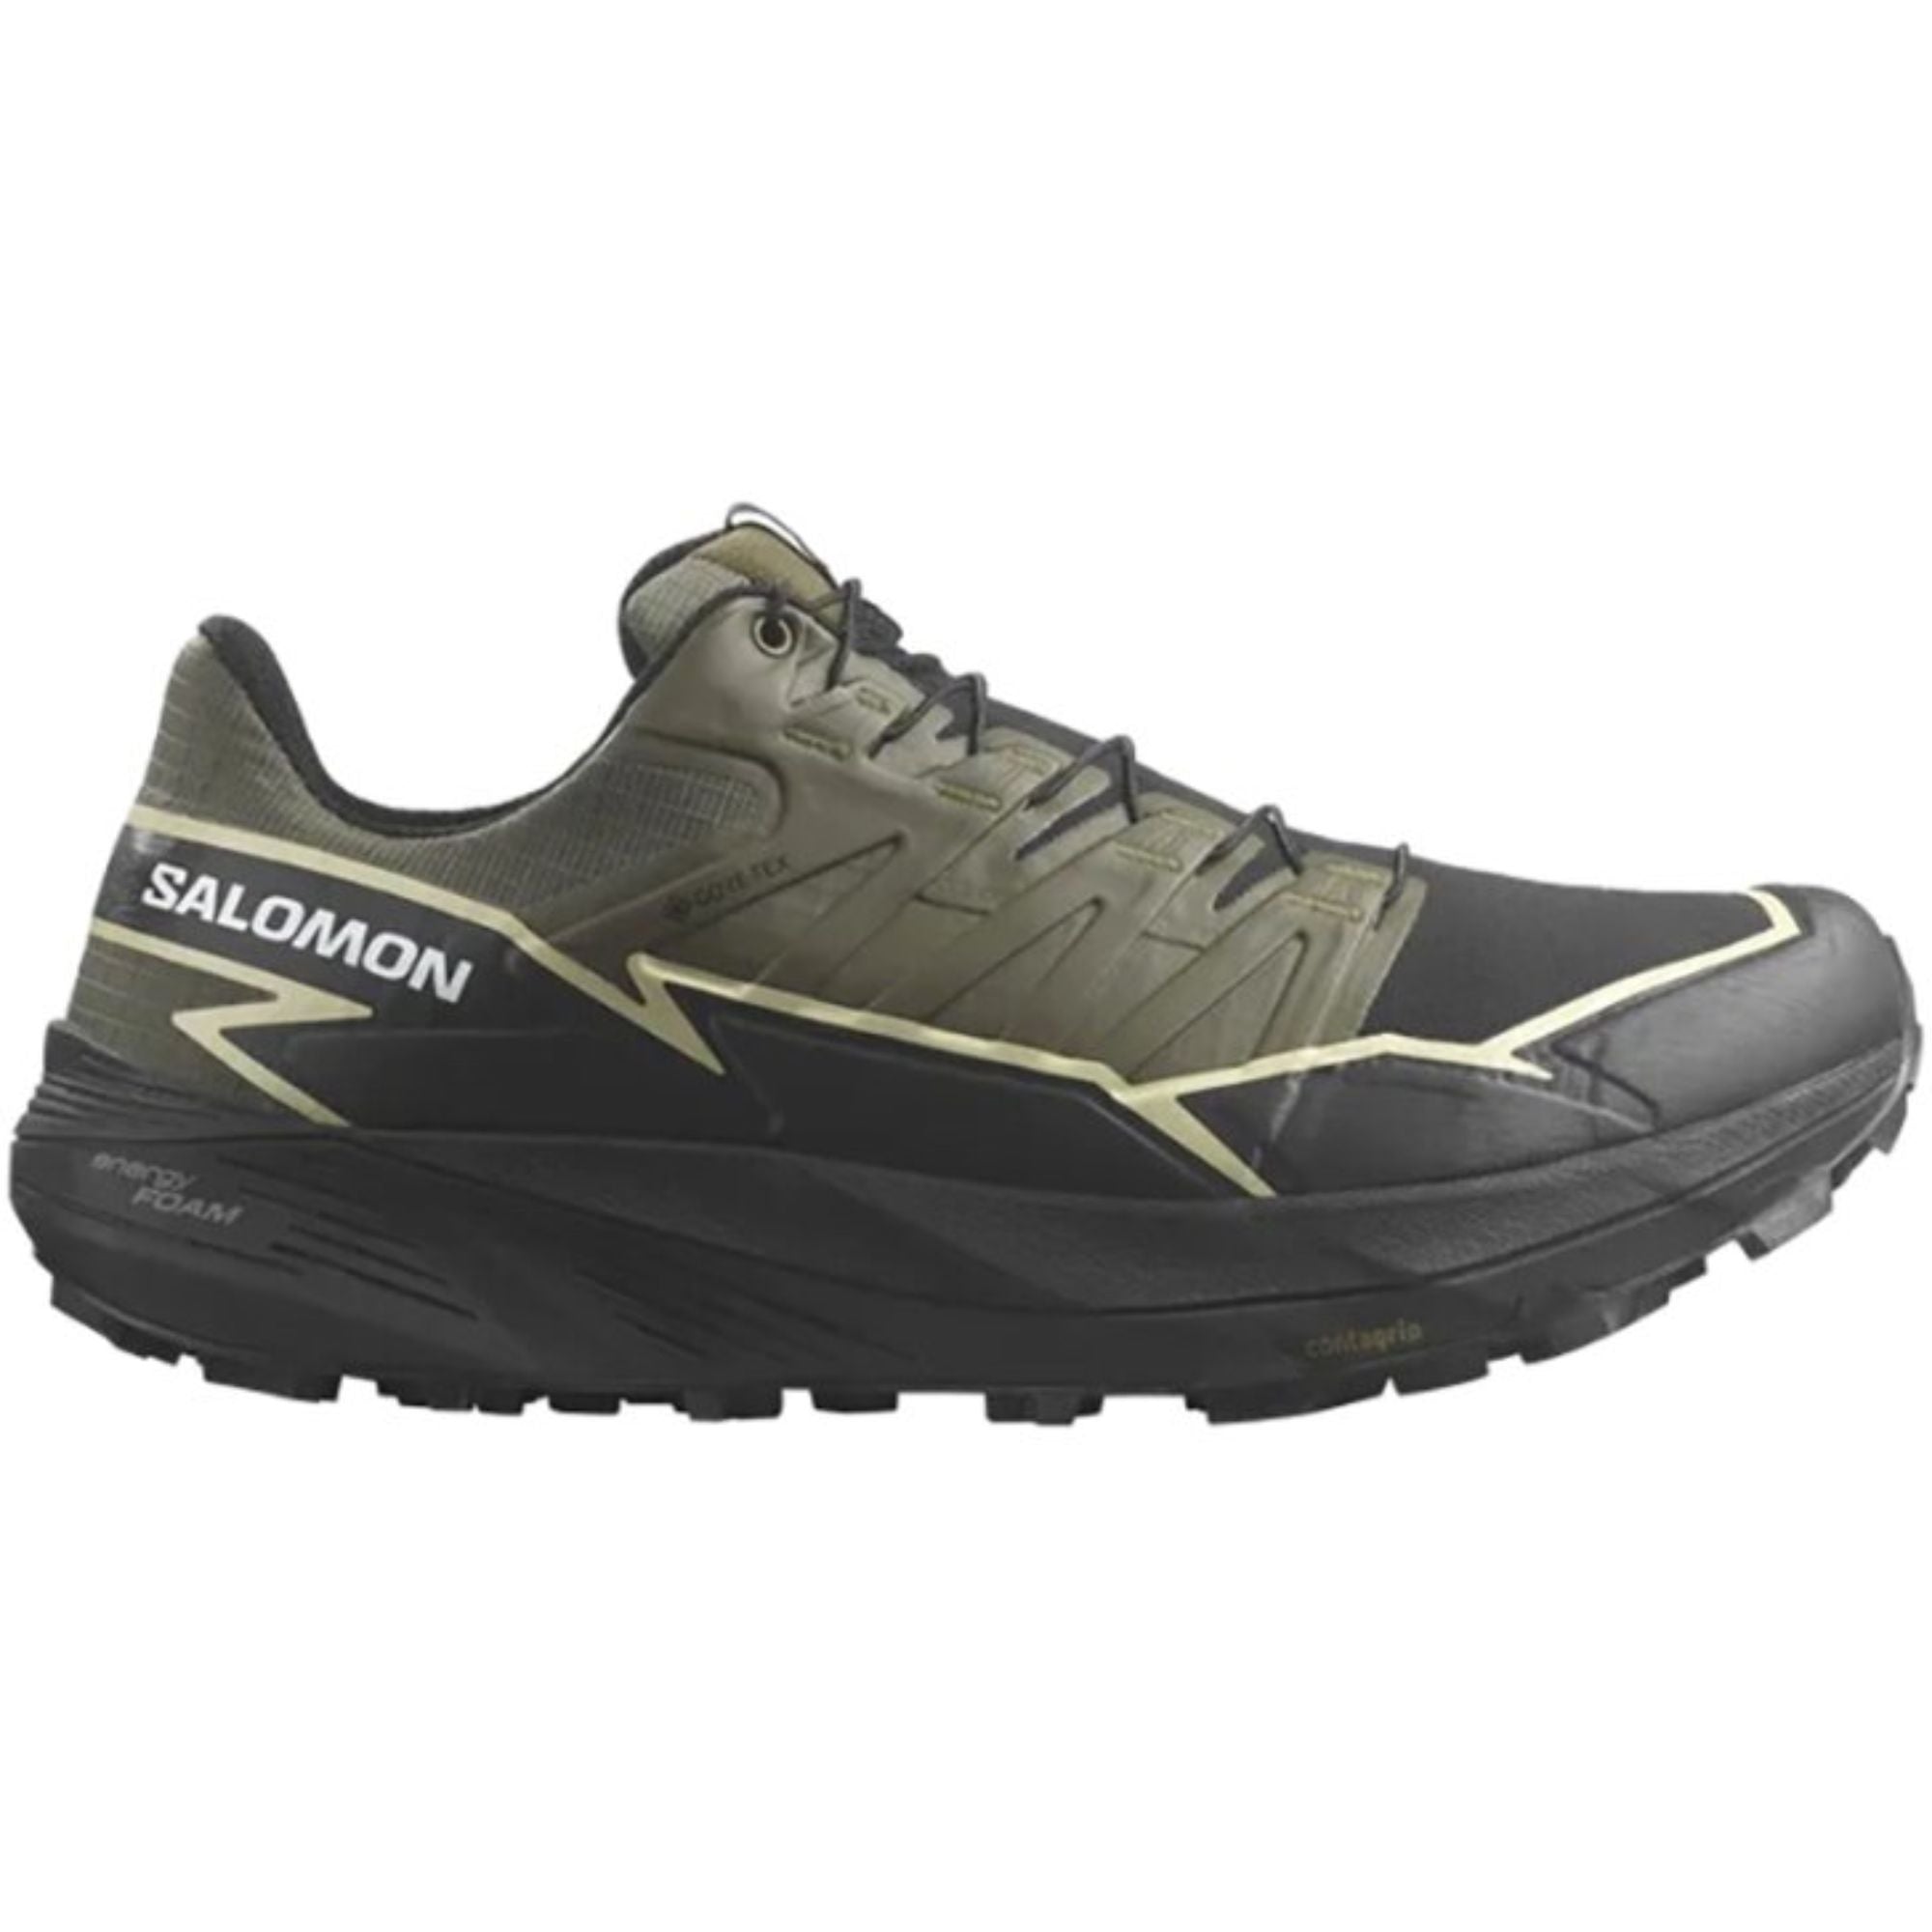 Salomon Thundercross GTX Shoe | SALOMON | Portwest - The Outdoor Shop